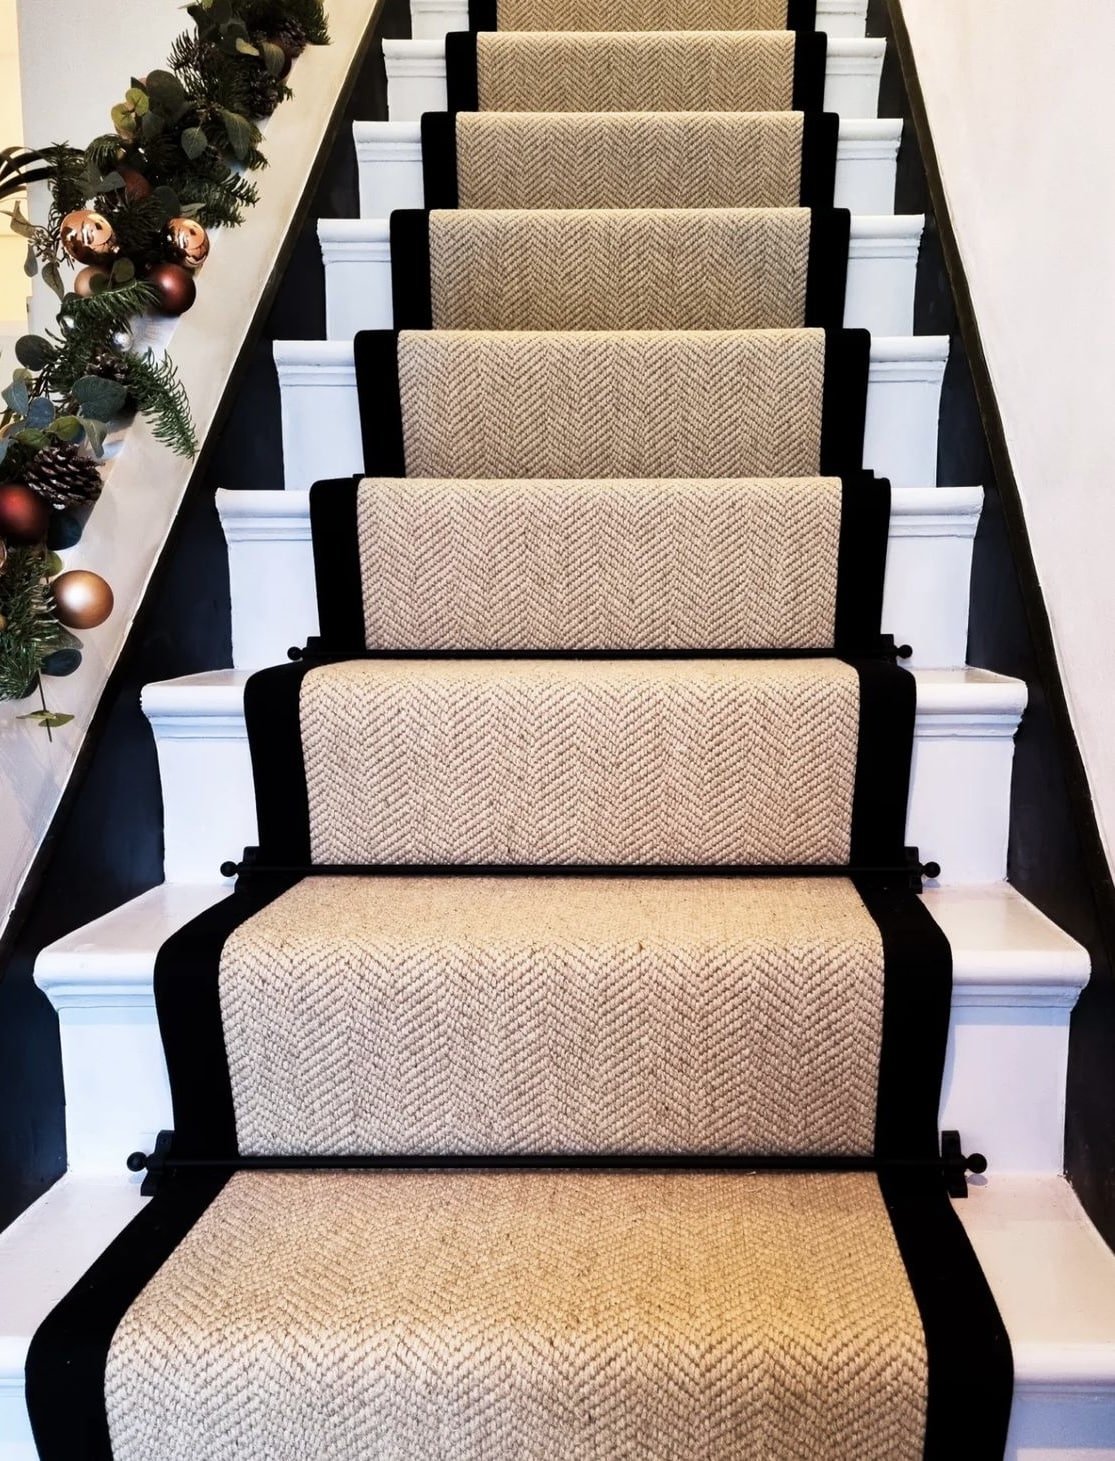 stair carpet runner ideas